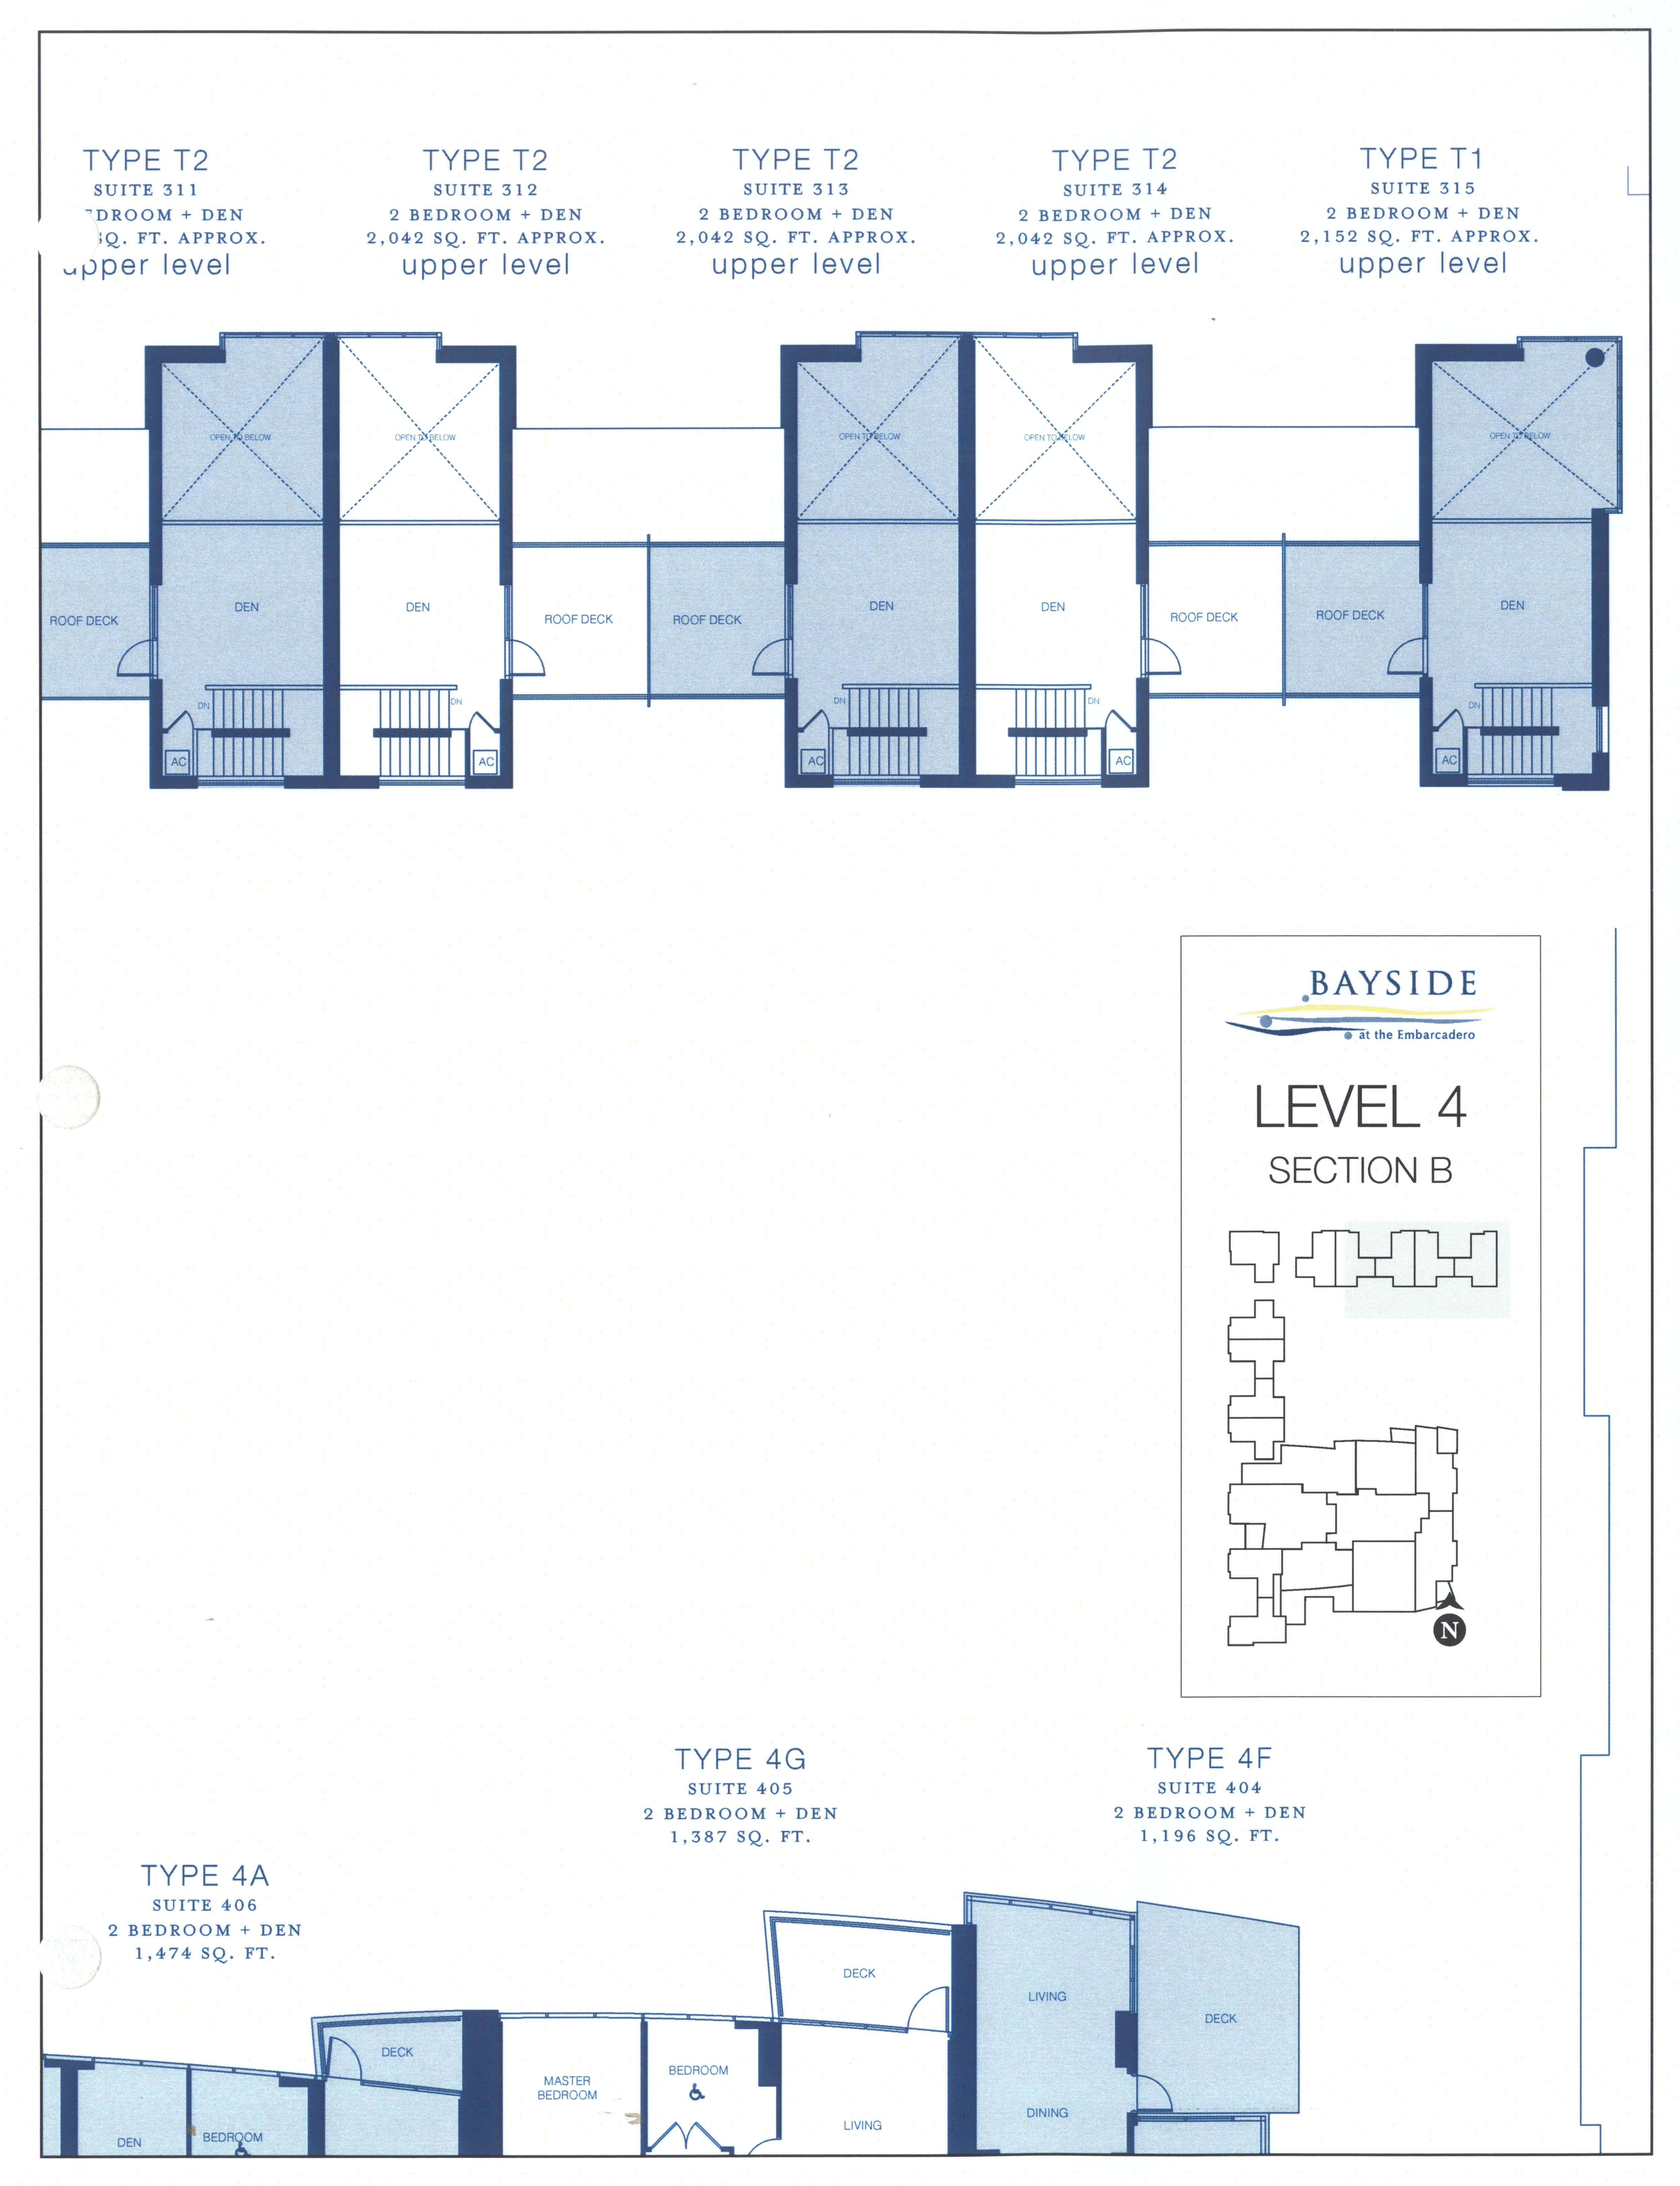 Bayside Floor Plan Level 4 Section B